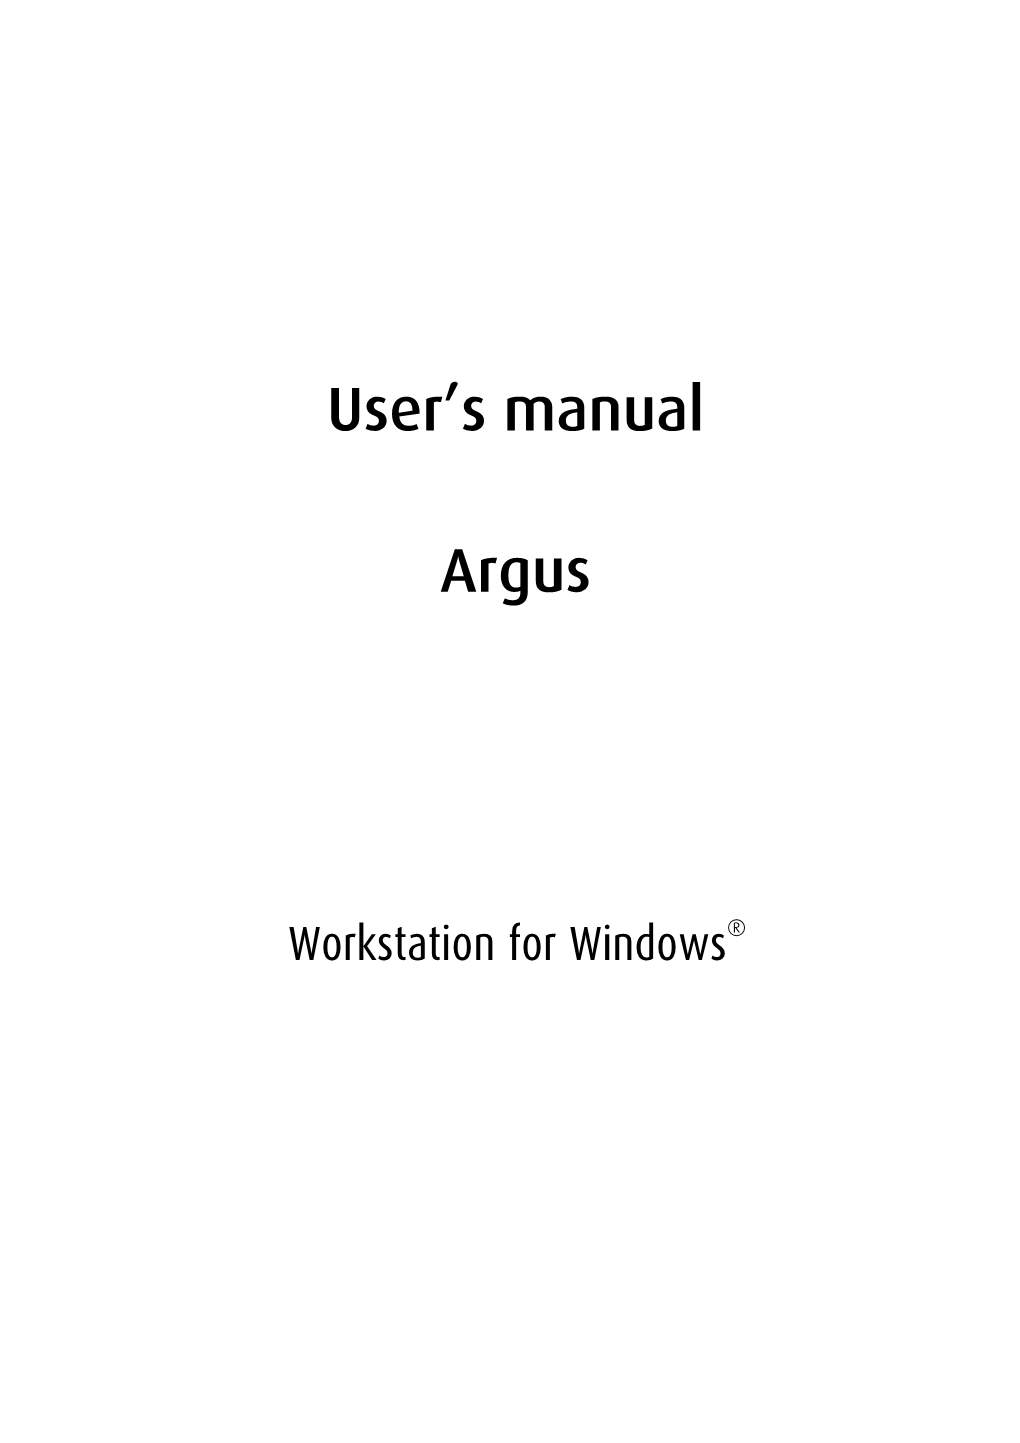 User's Manual Argus